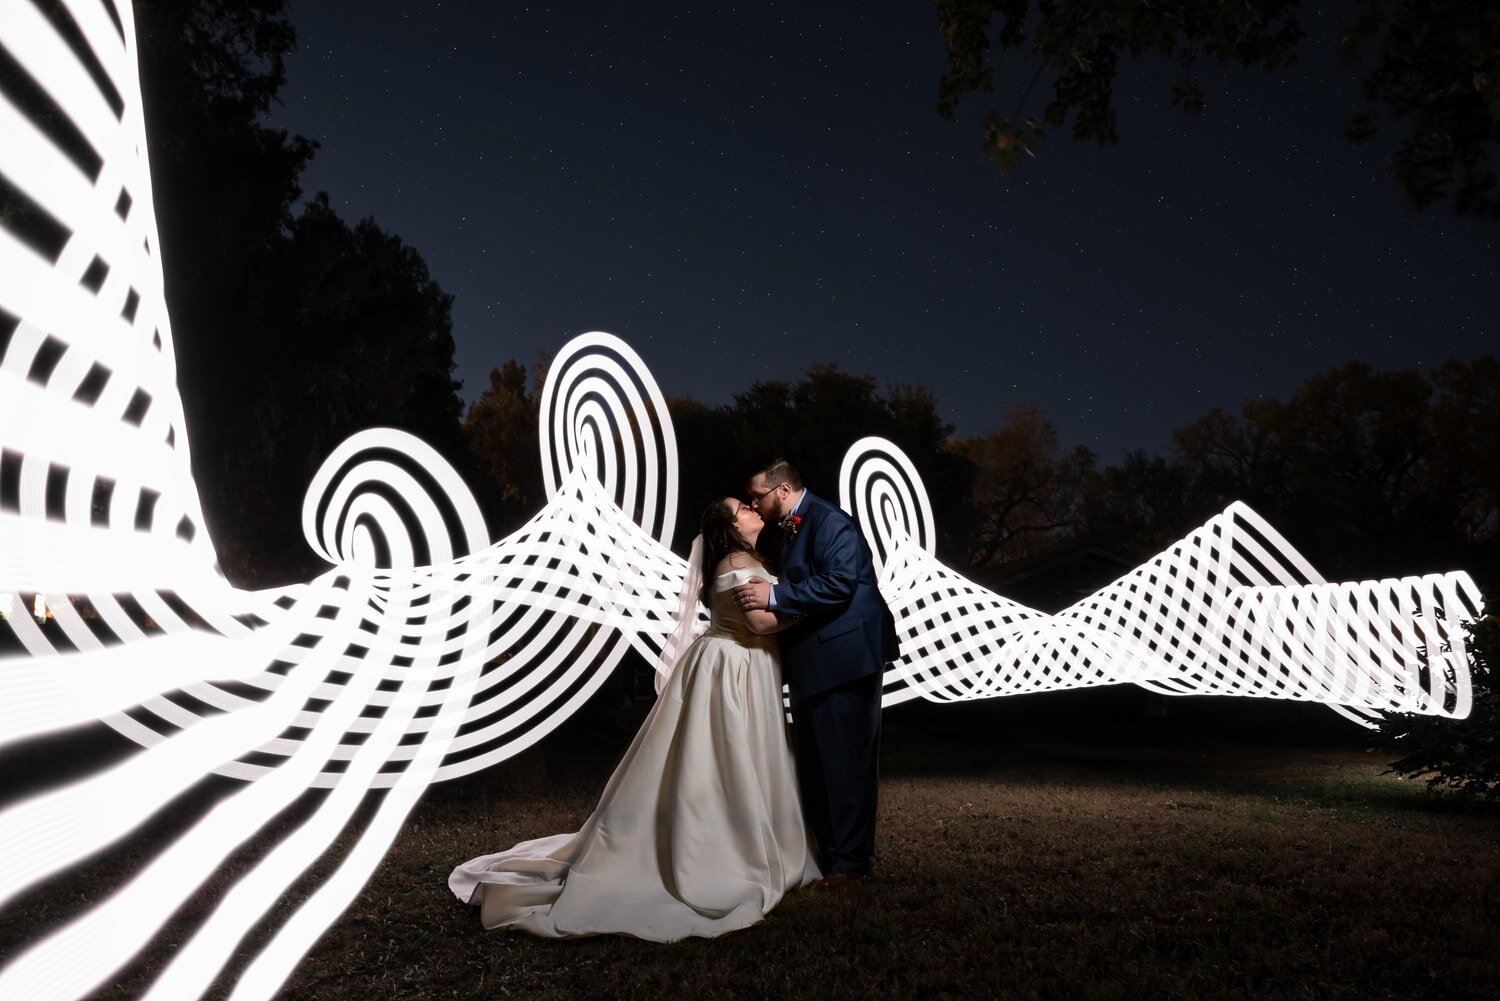 wedding-photographer-photography-okc-edmond-oklahoma-city-beautiful-bride-groom-bridesmaids-groomsmen-bridal-party-portrait-night-sky-light-paint-white-lines-chadandbriephotography.jpg